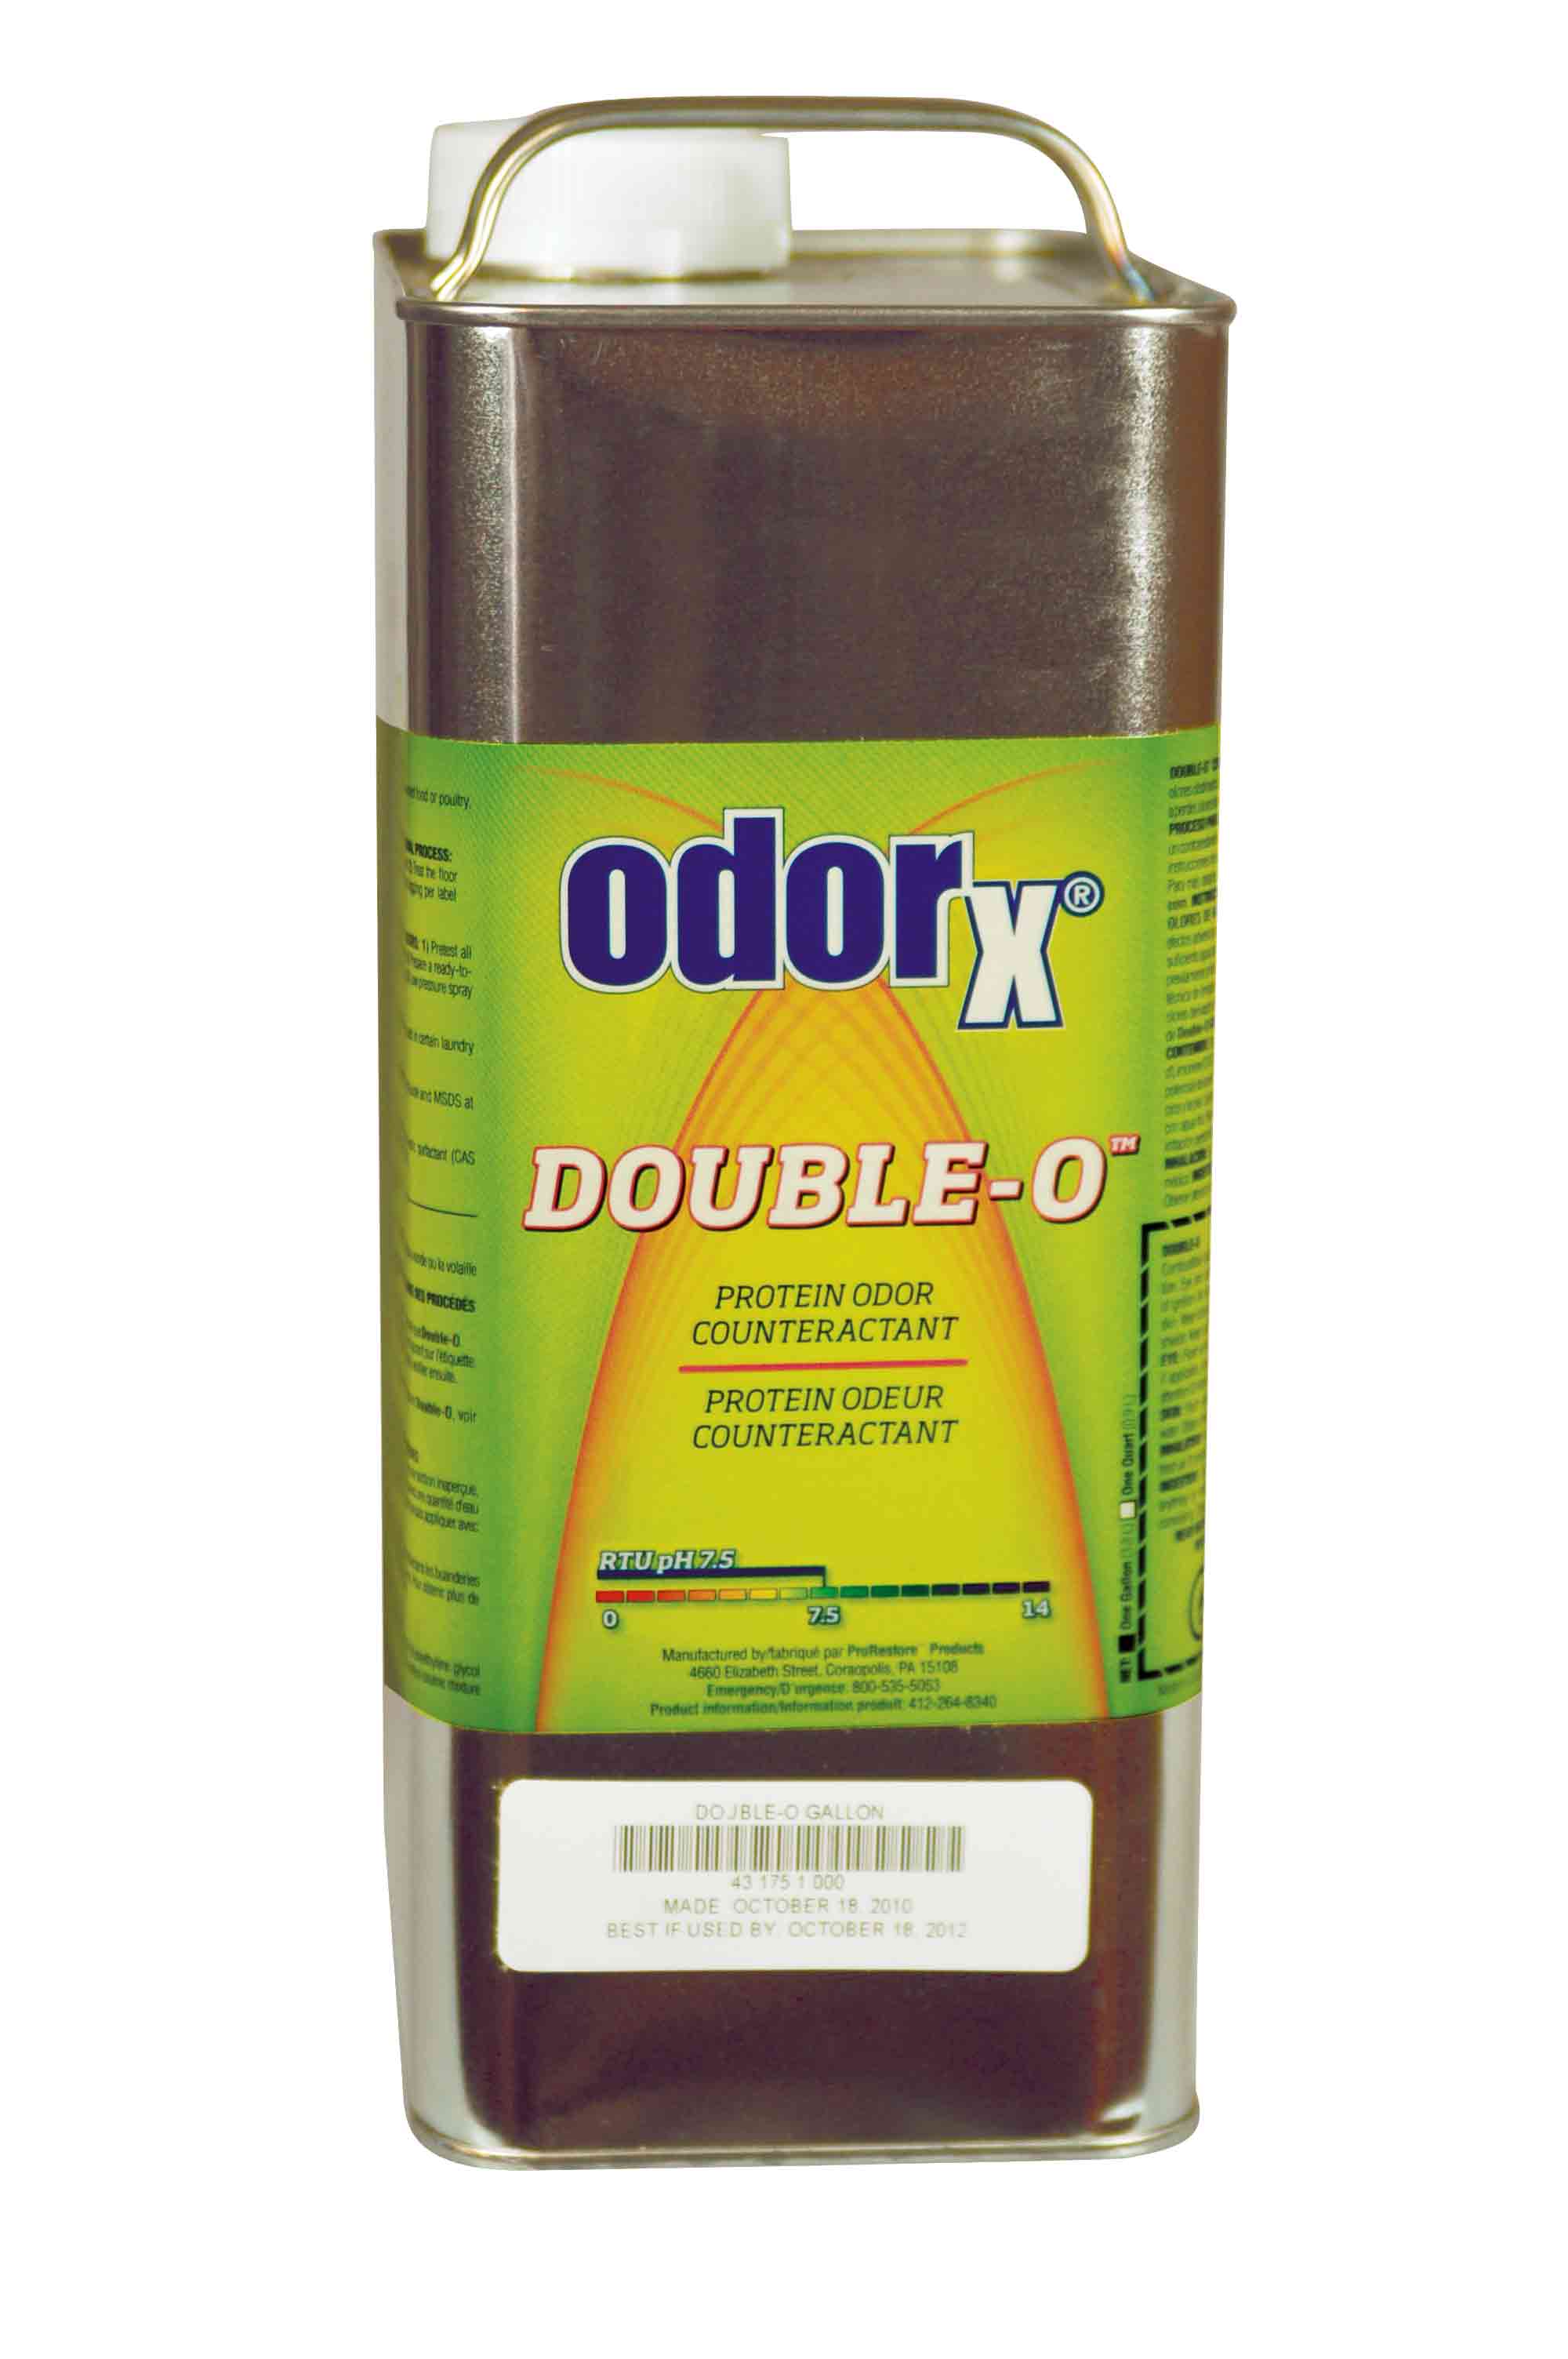 ODORx Double-O